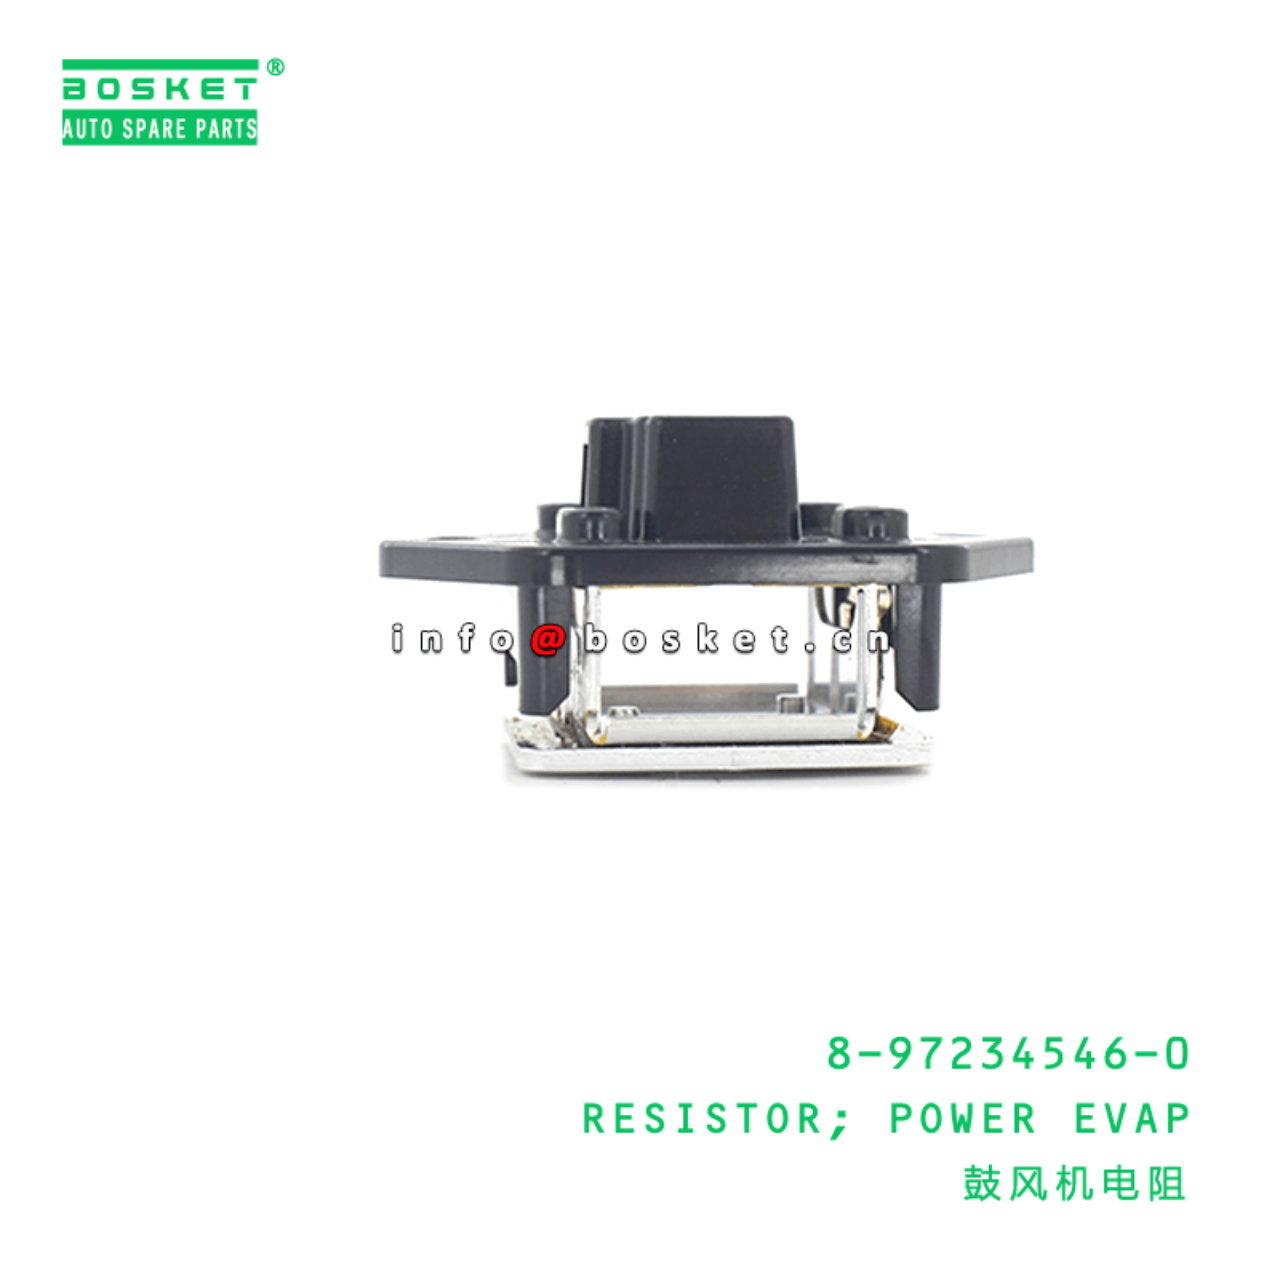 8-97234546-0 Power Evaporation Resistor 8972345460 Suitable for ISUZU NPR94 